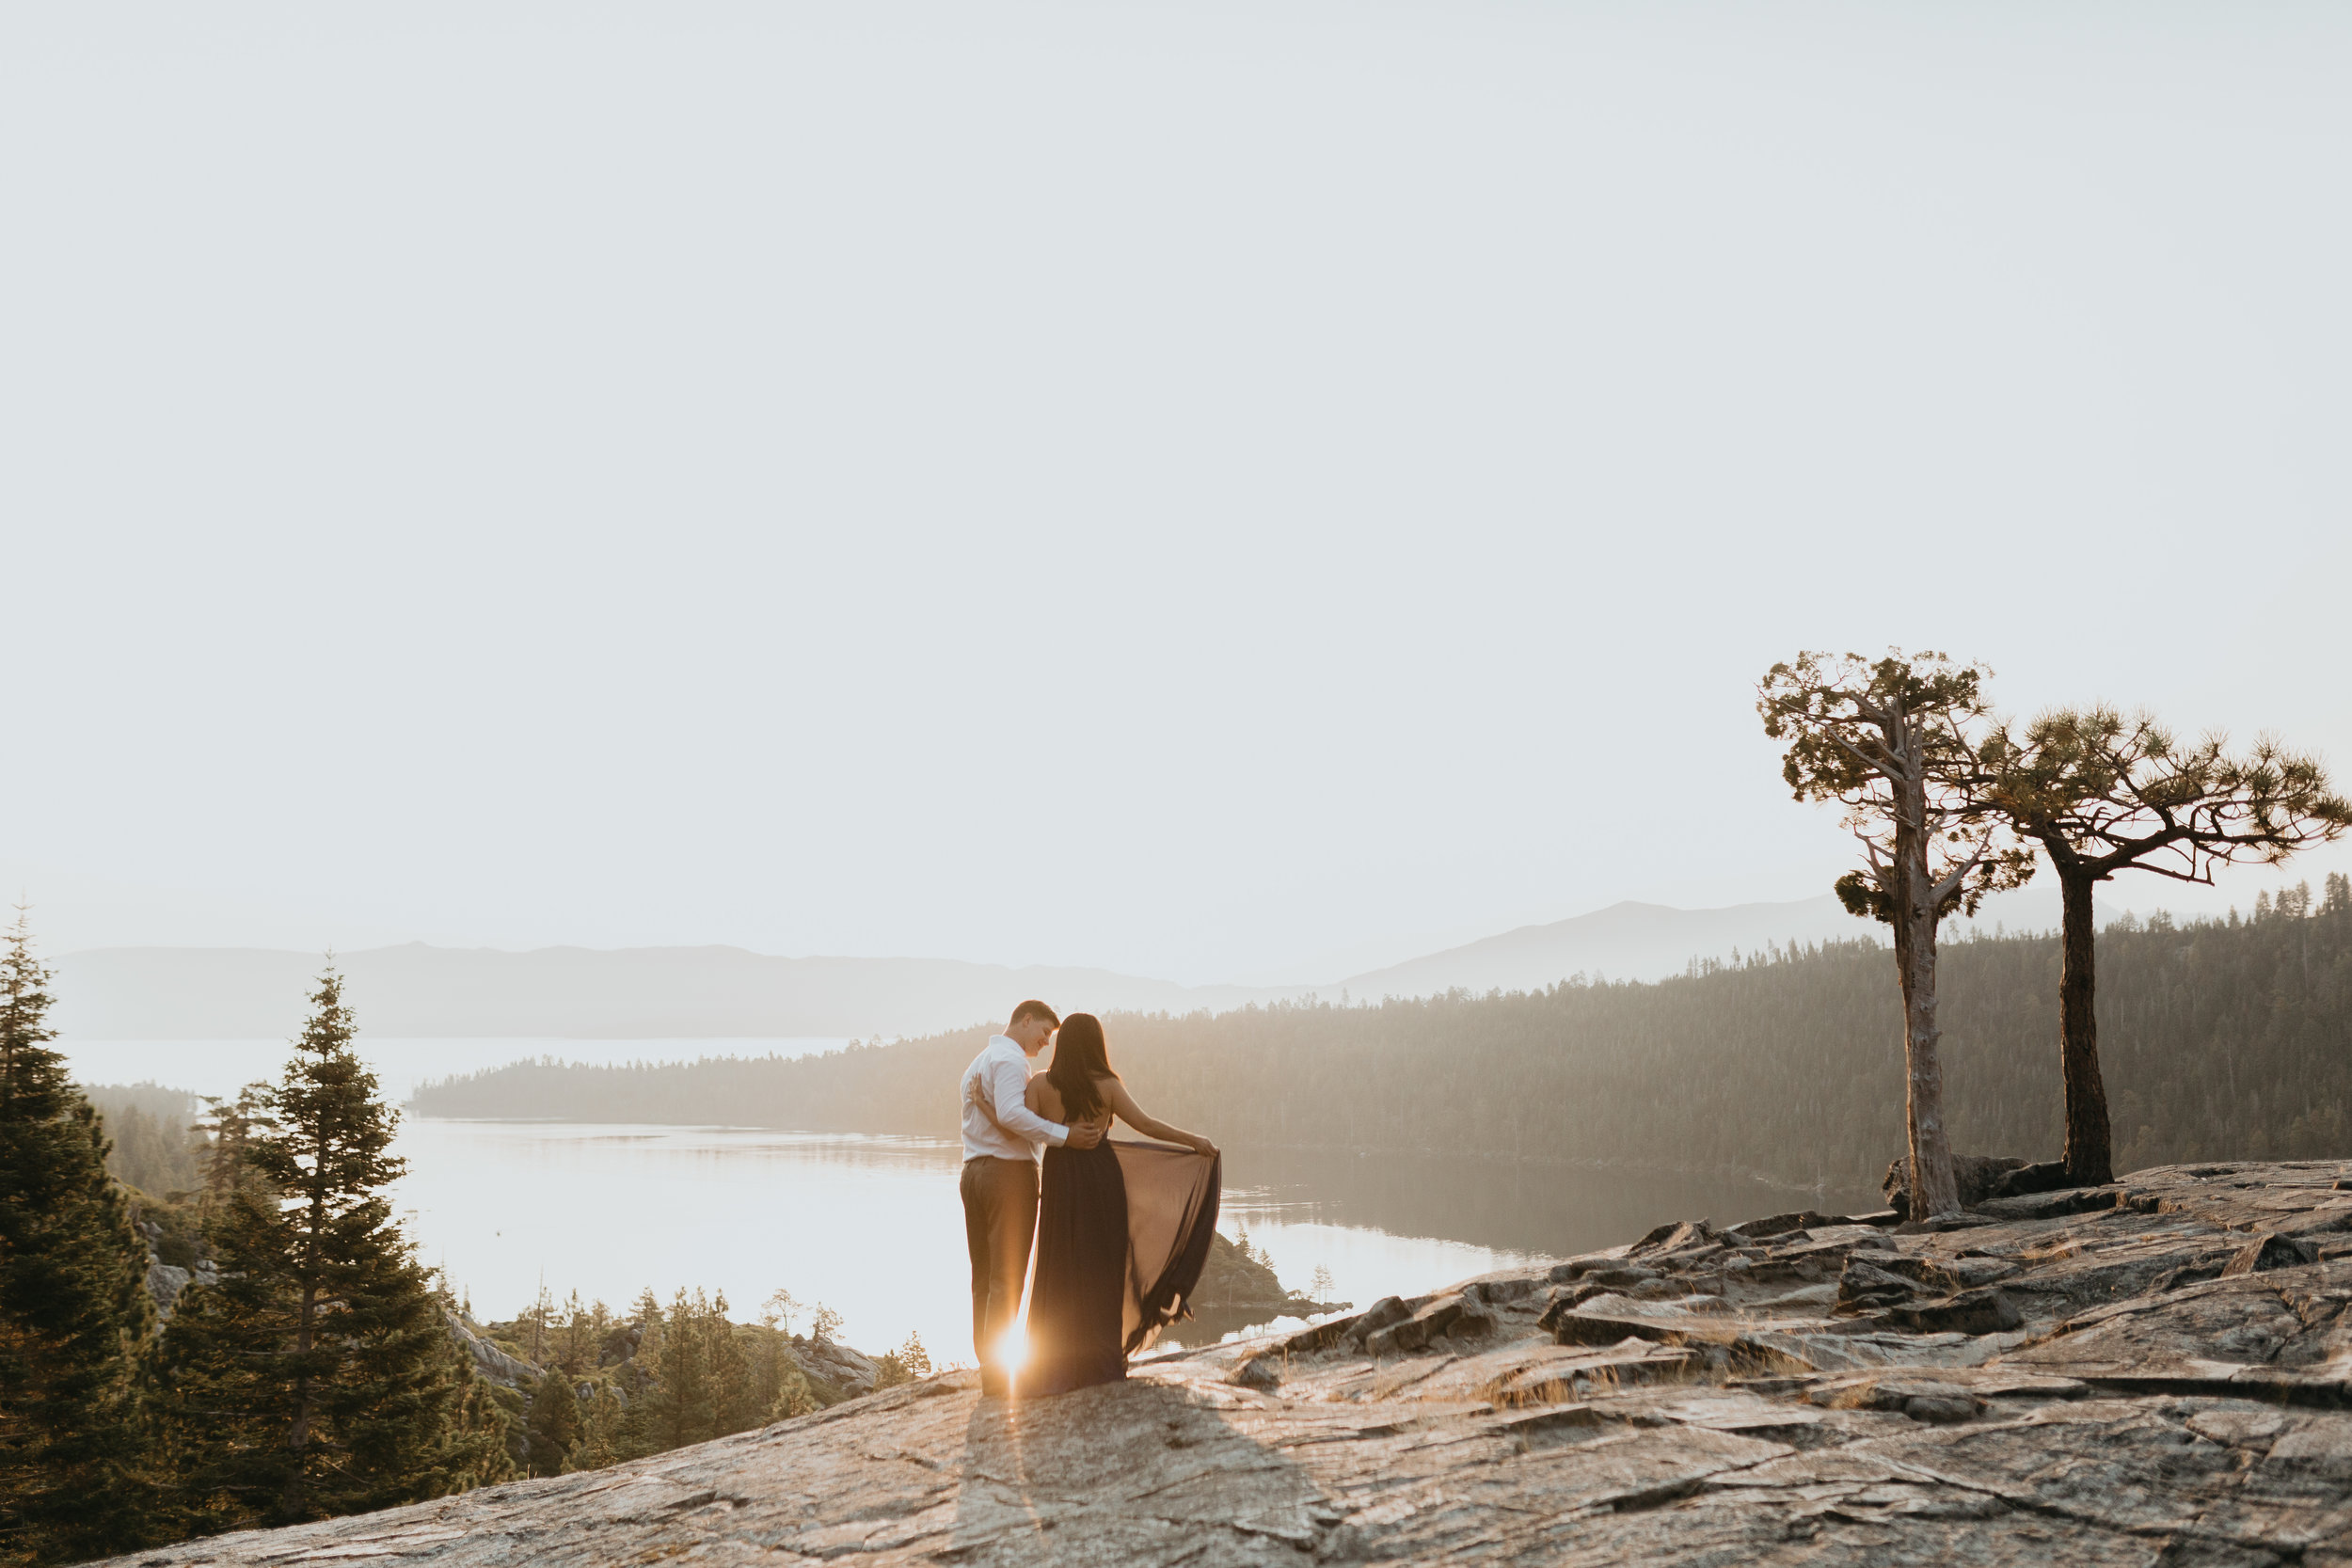 nicole-daacke-photography-lake-tahoe-sunrise-summer-adventure-engagement-photos-nevada-wedding-elopement-photographer-golden-emerald-bay-light-pine-trees-summer-vibe-fun-carefree-authentic-love-31.jpg